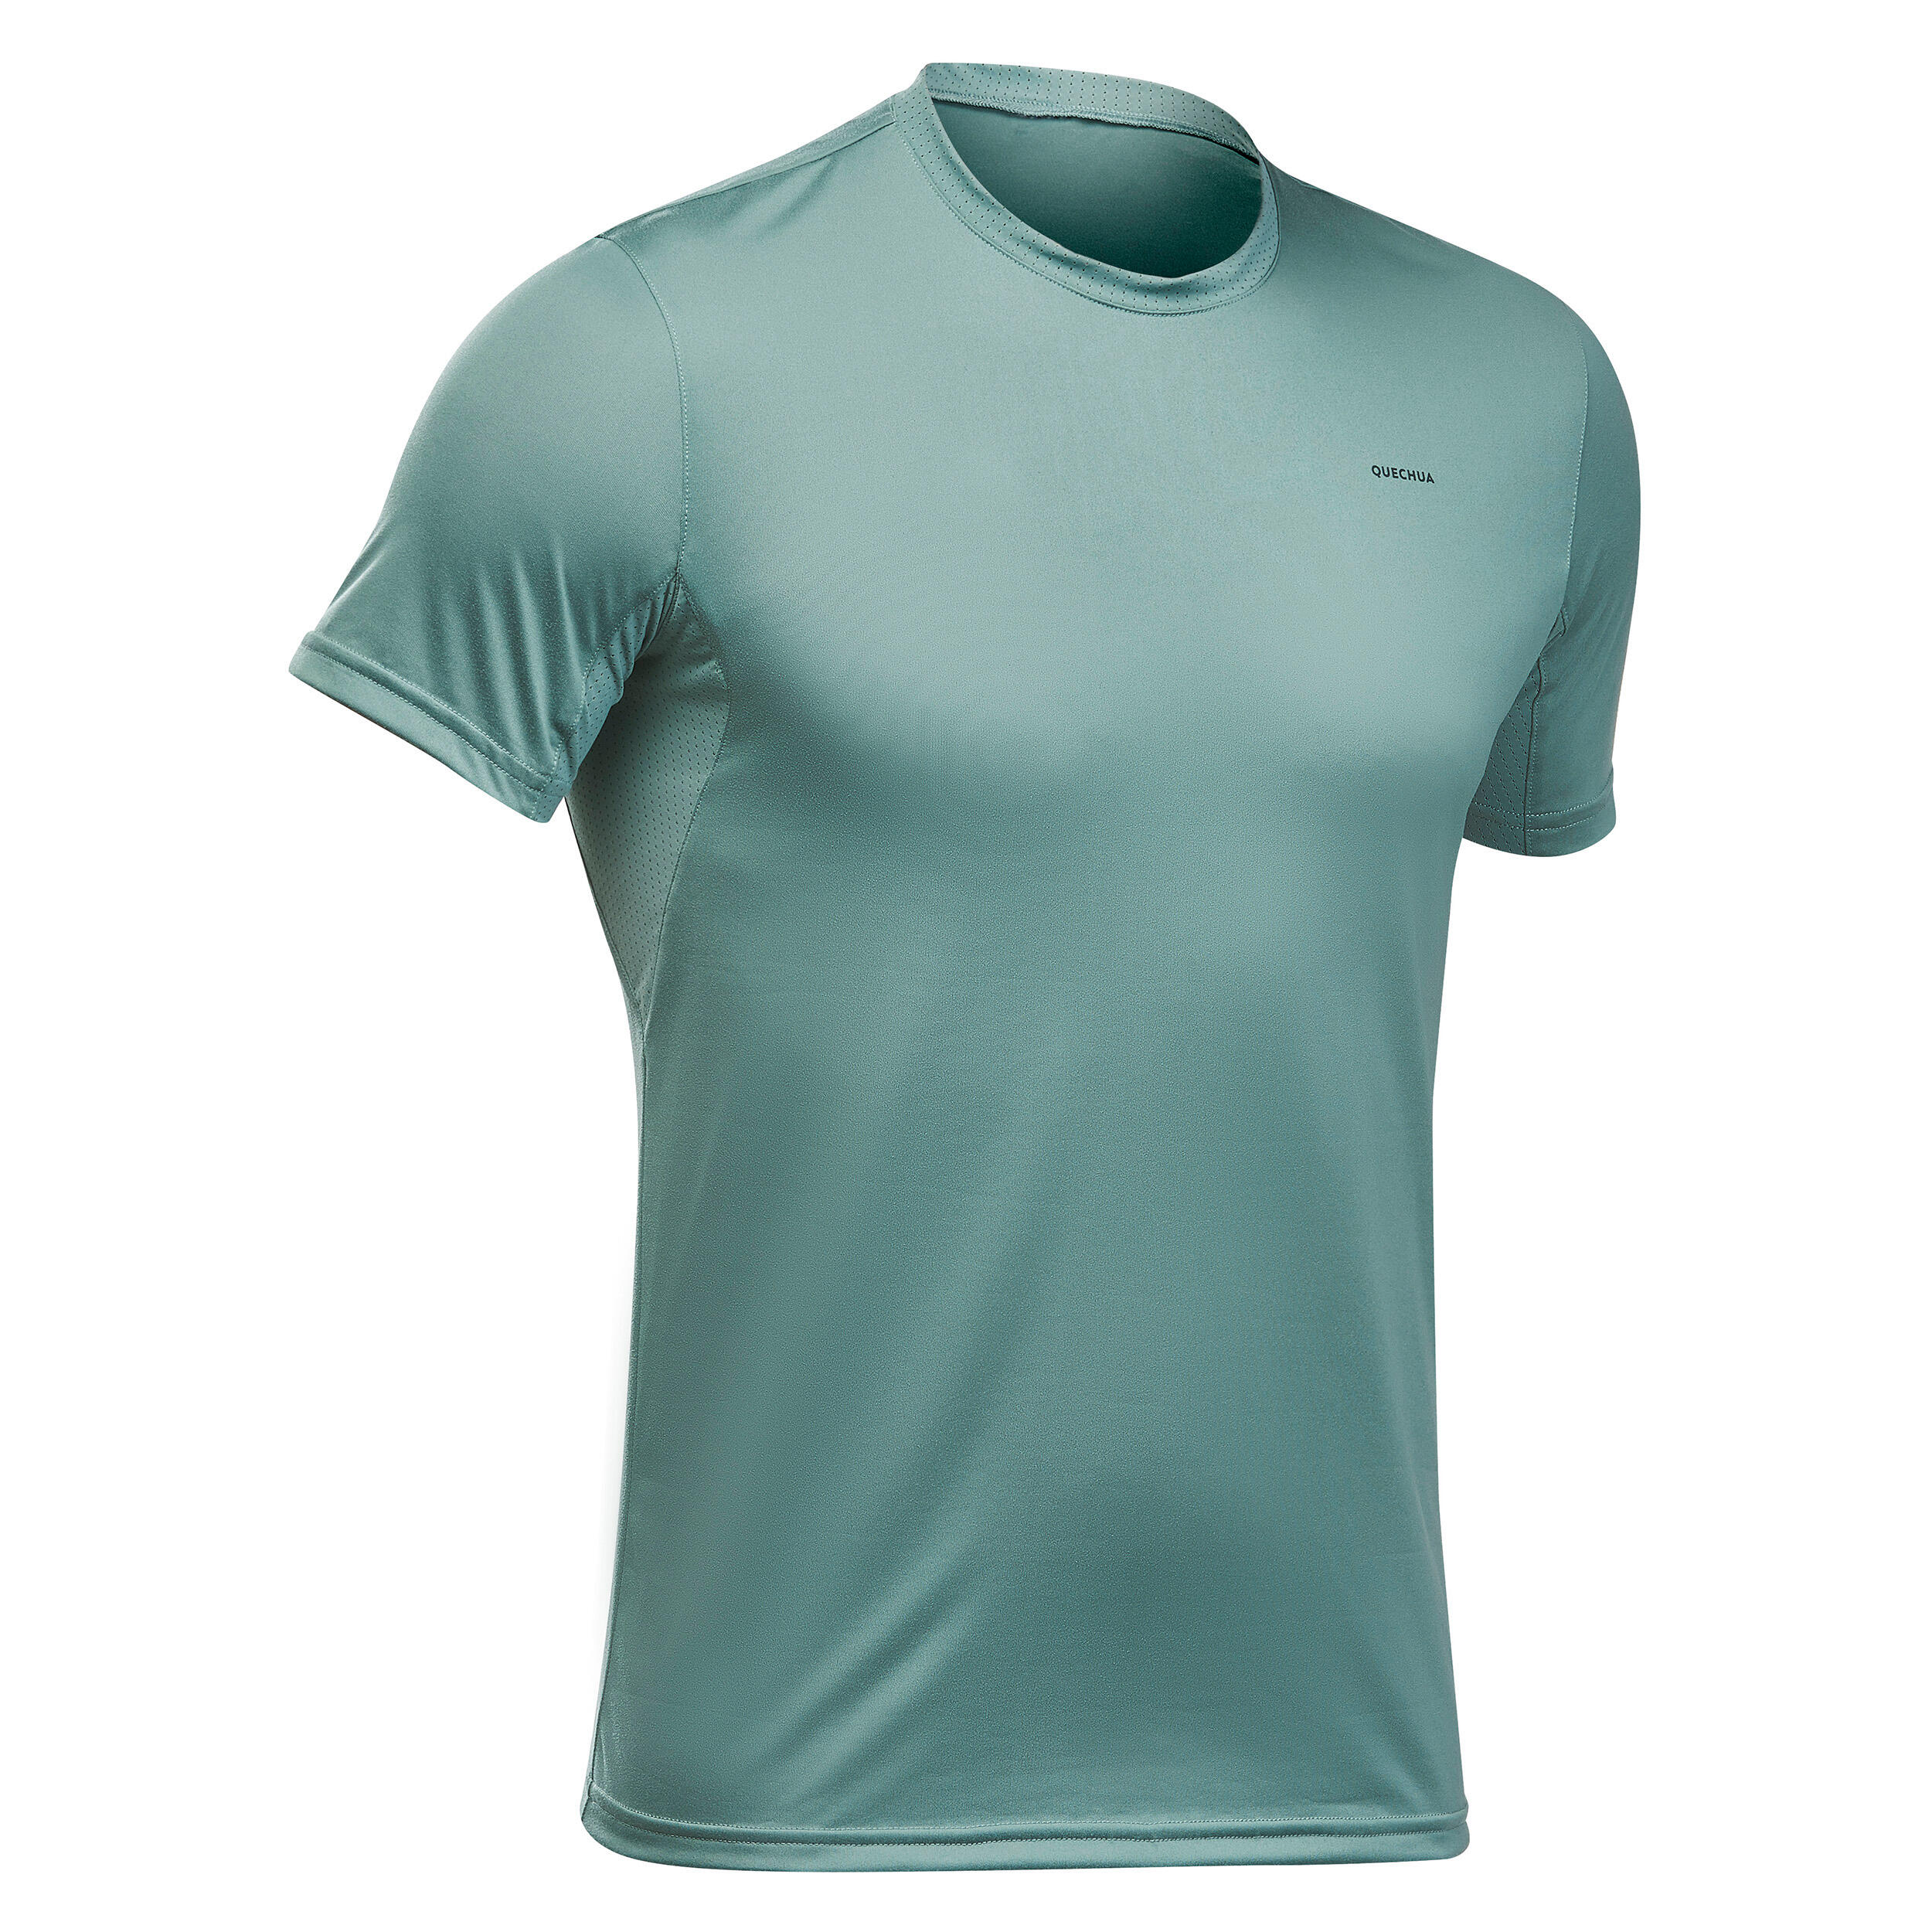 Men's Workout Shirts Lightweight Sun Protection SPF Quick Dry T-Shirts Fishing Hiking Running 